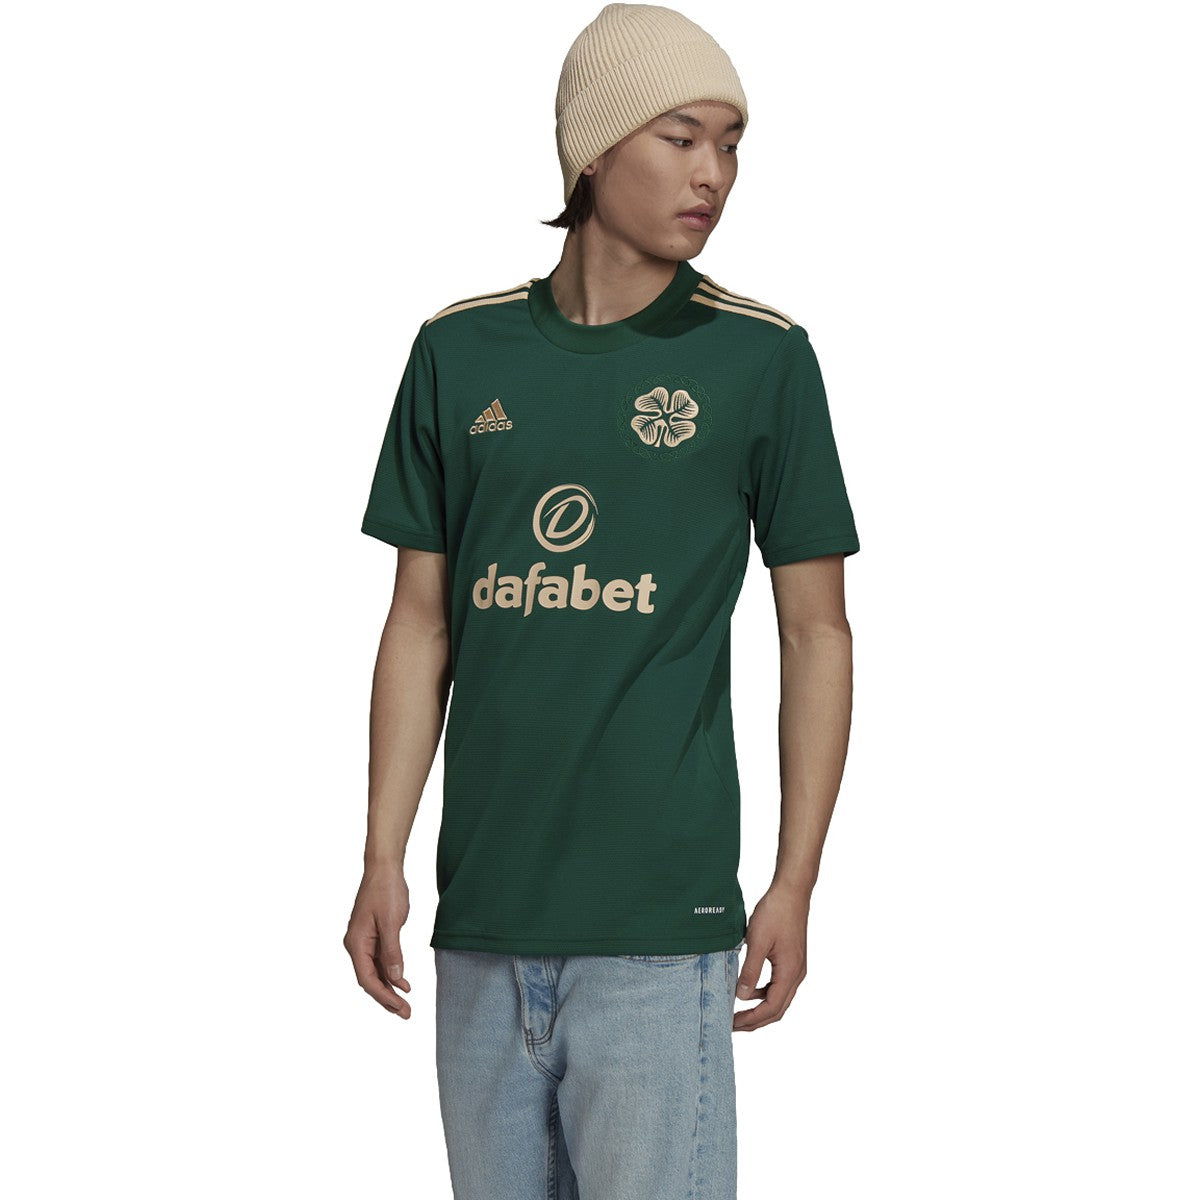 New Celtic Teamgeist Top 2021, Adidas Special Retro Black & Green Kit